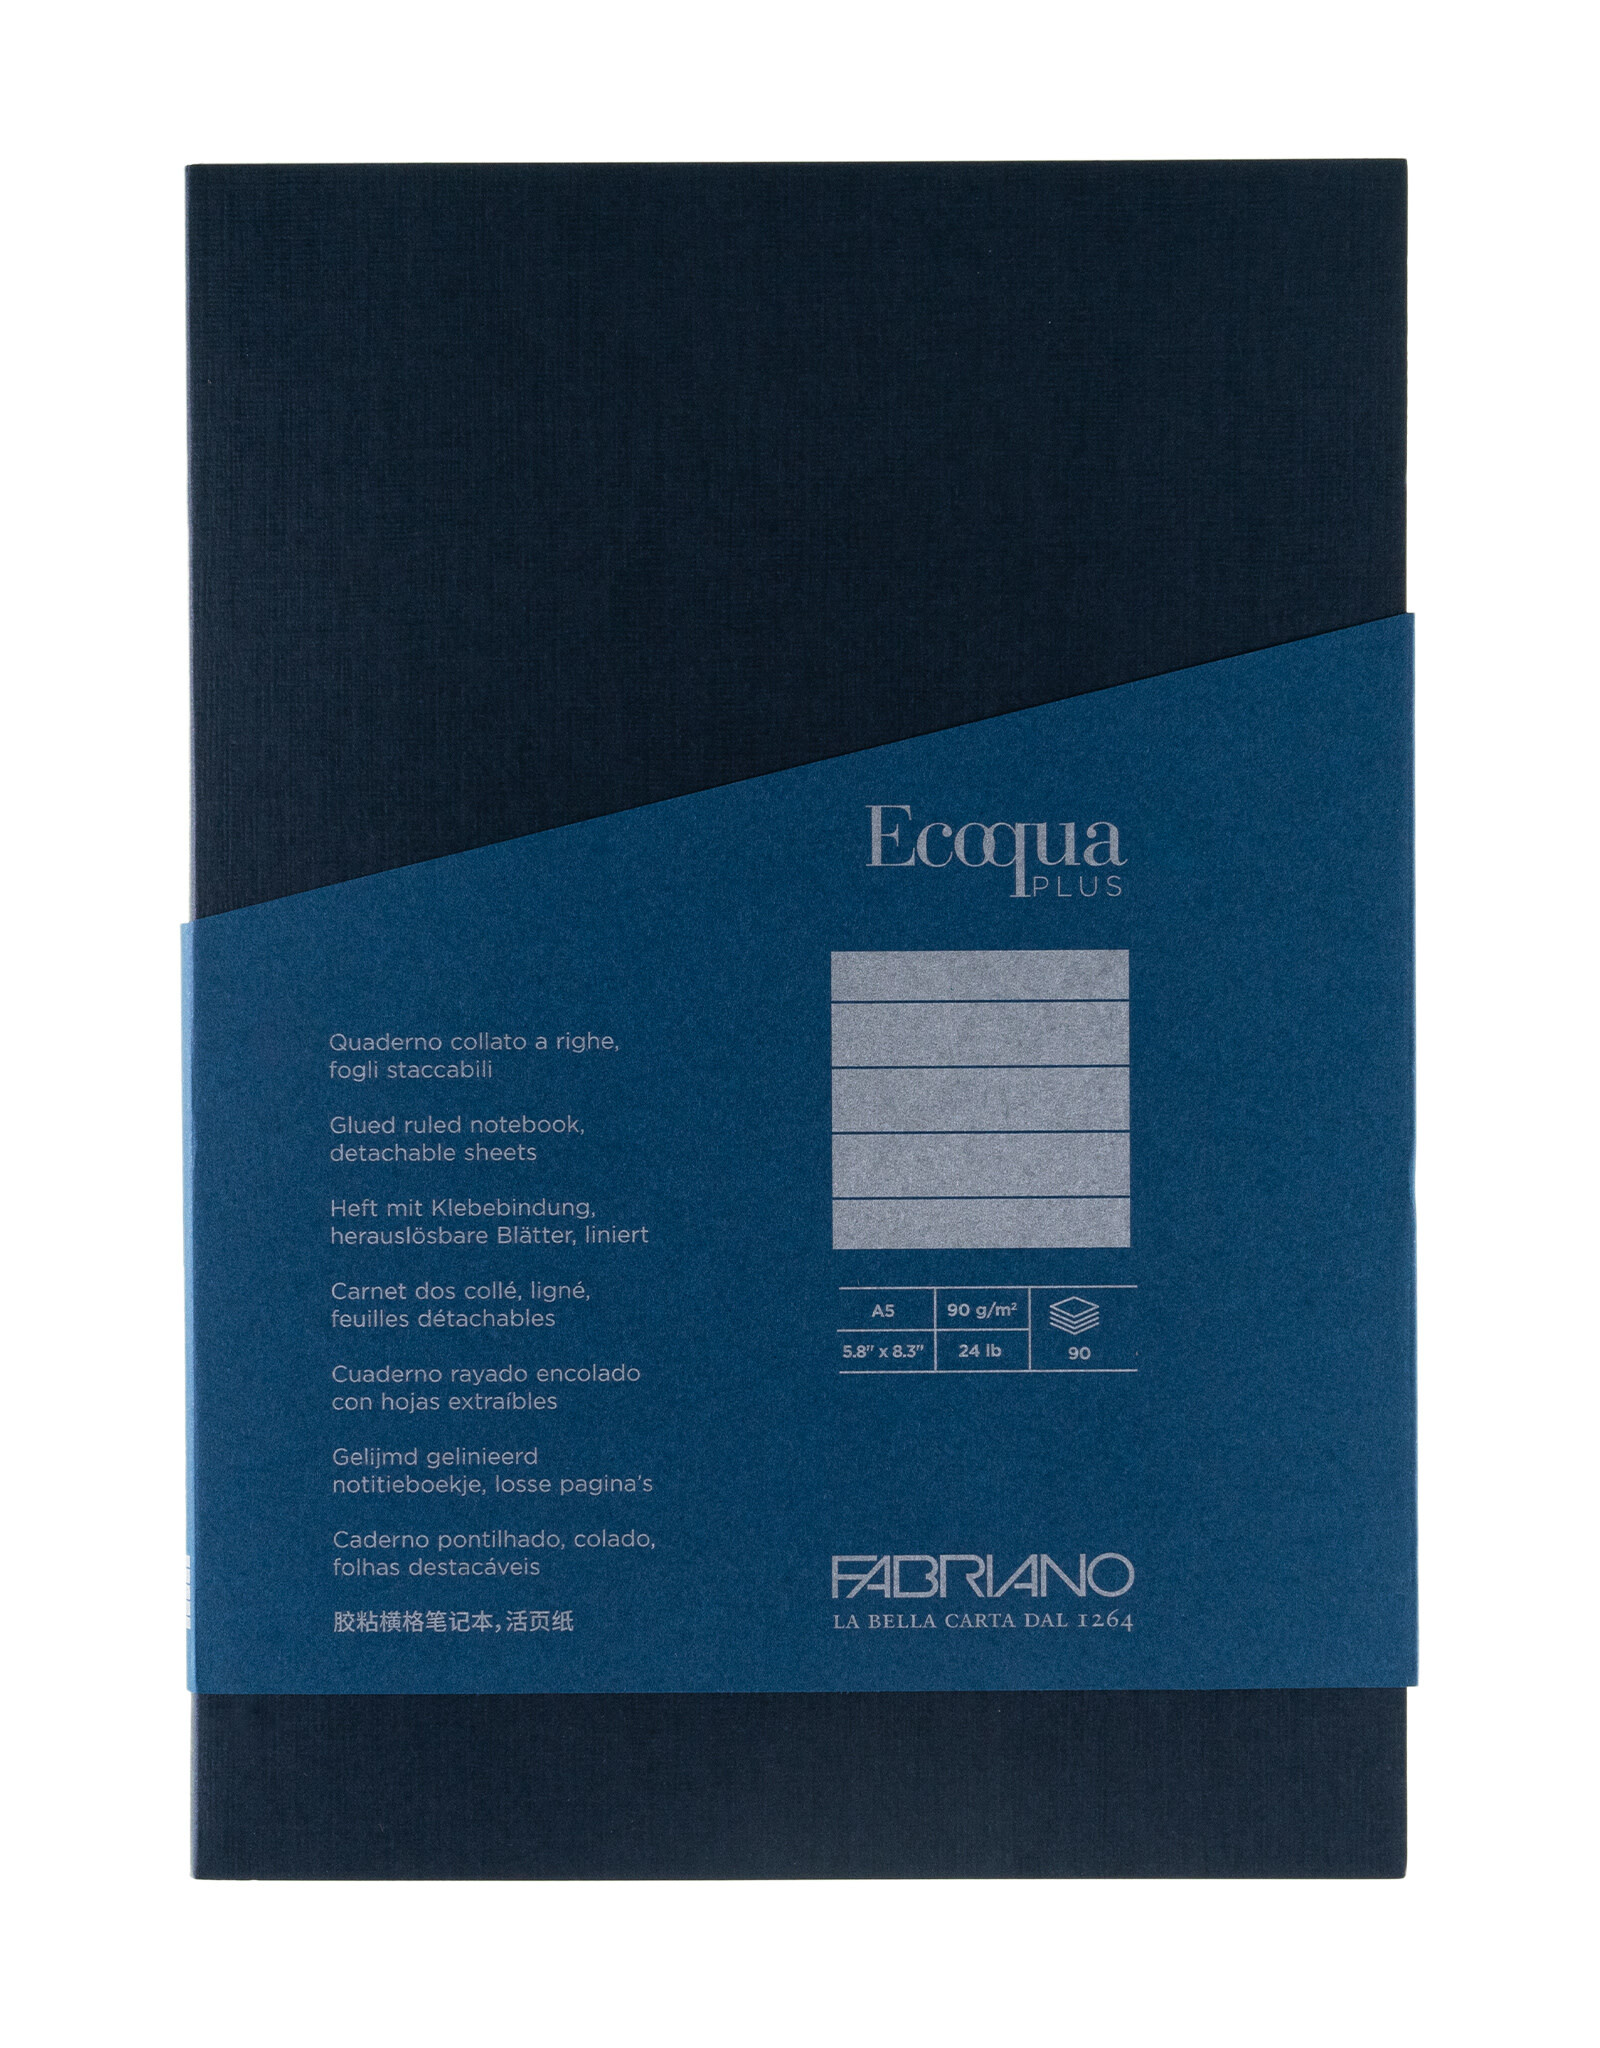 Ecoqua Plus Glue Bound Notebook, Navy, A5, Ruled